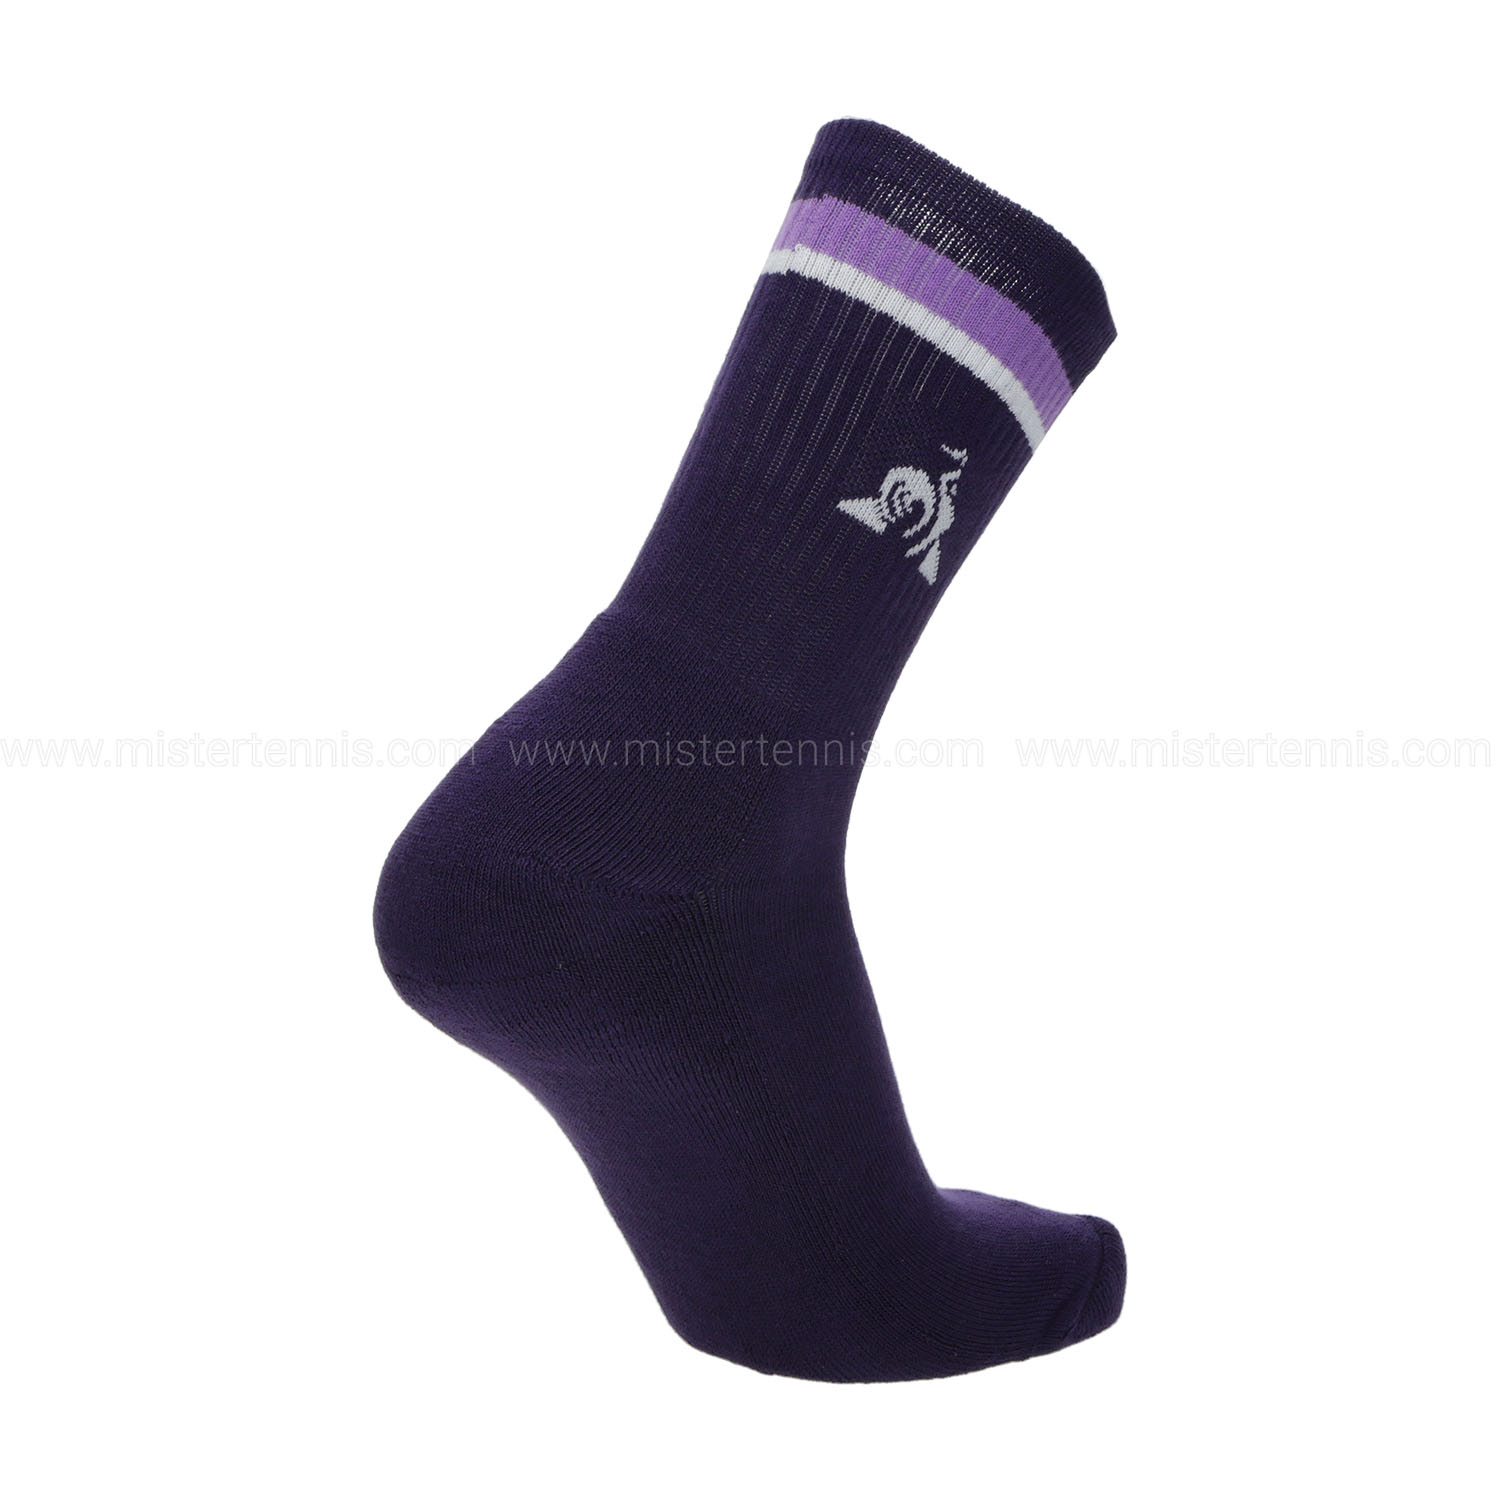 Le Coq Sportif Court Performance Socks - Purple Velvet